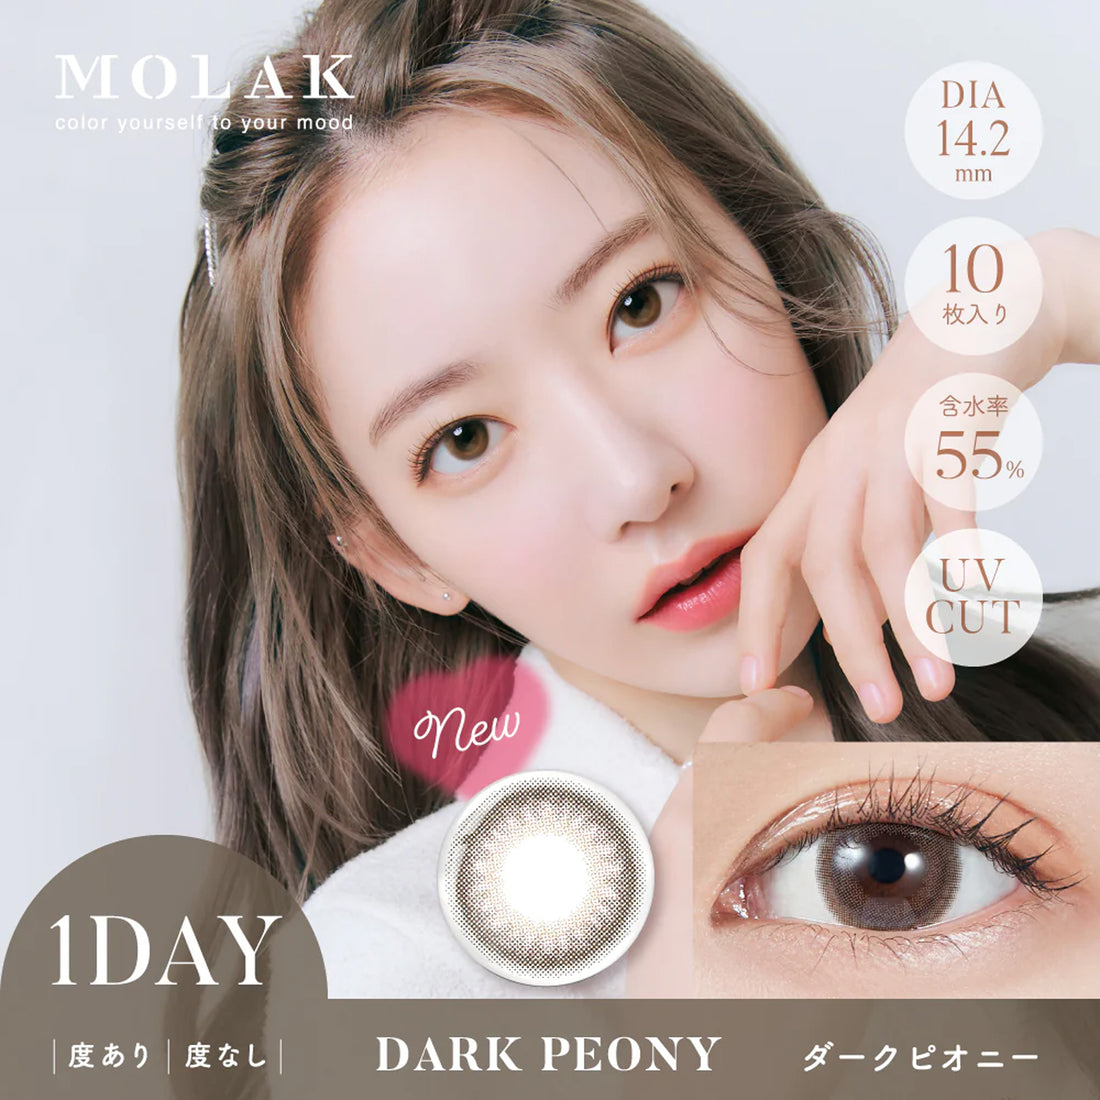 MOLAK Daily Contact Lenses-Dark Peony 10lenses